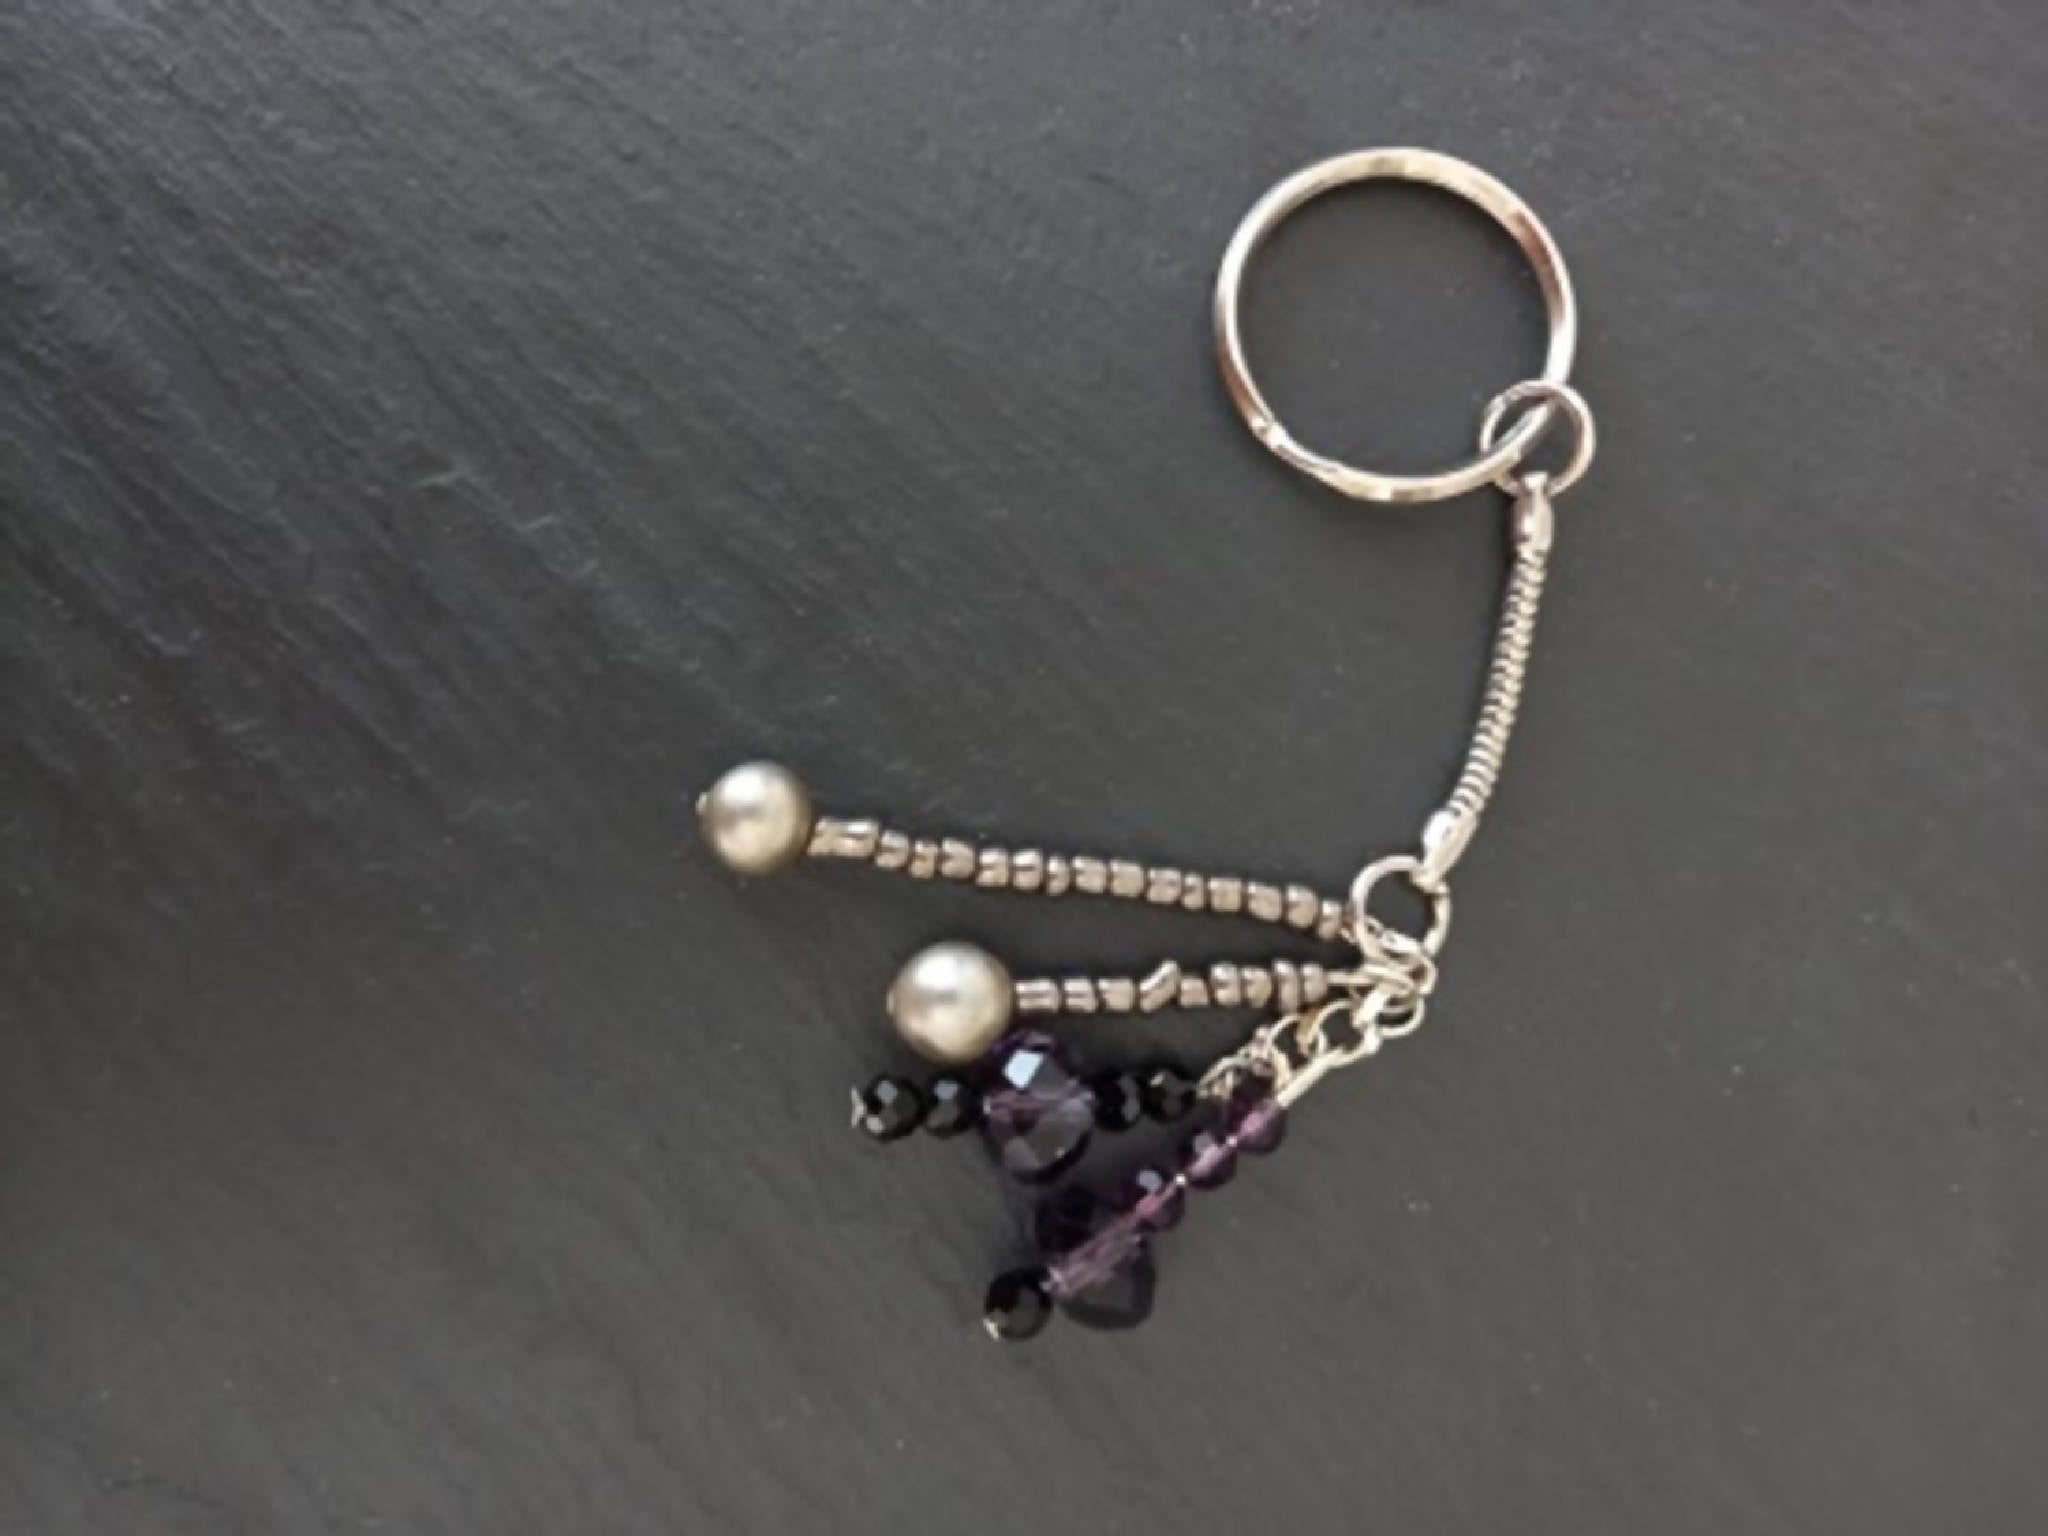 Keyring Handbag Charm with Purple and Silver Beads